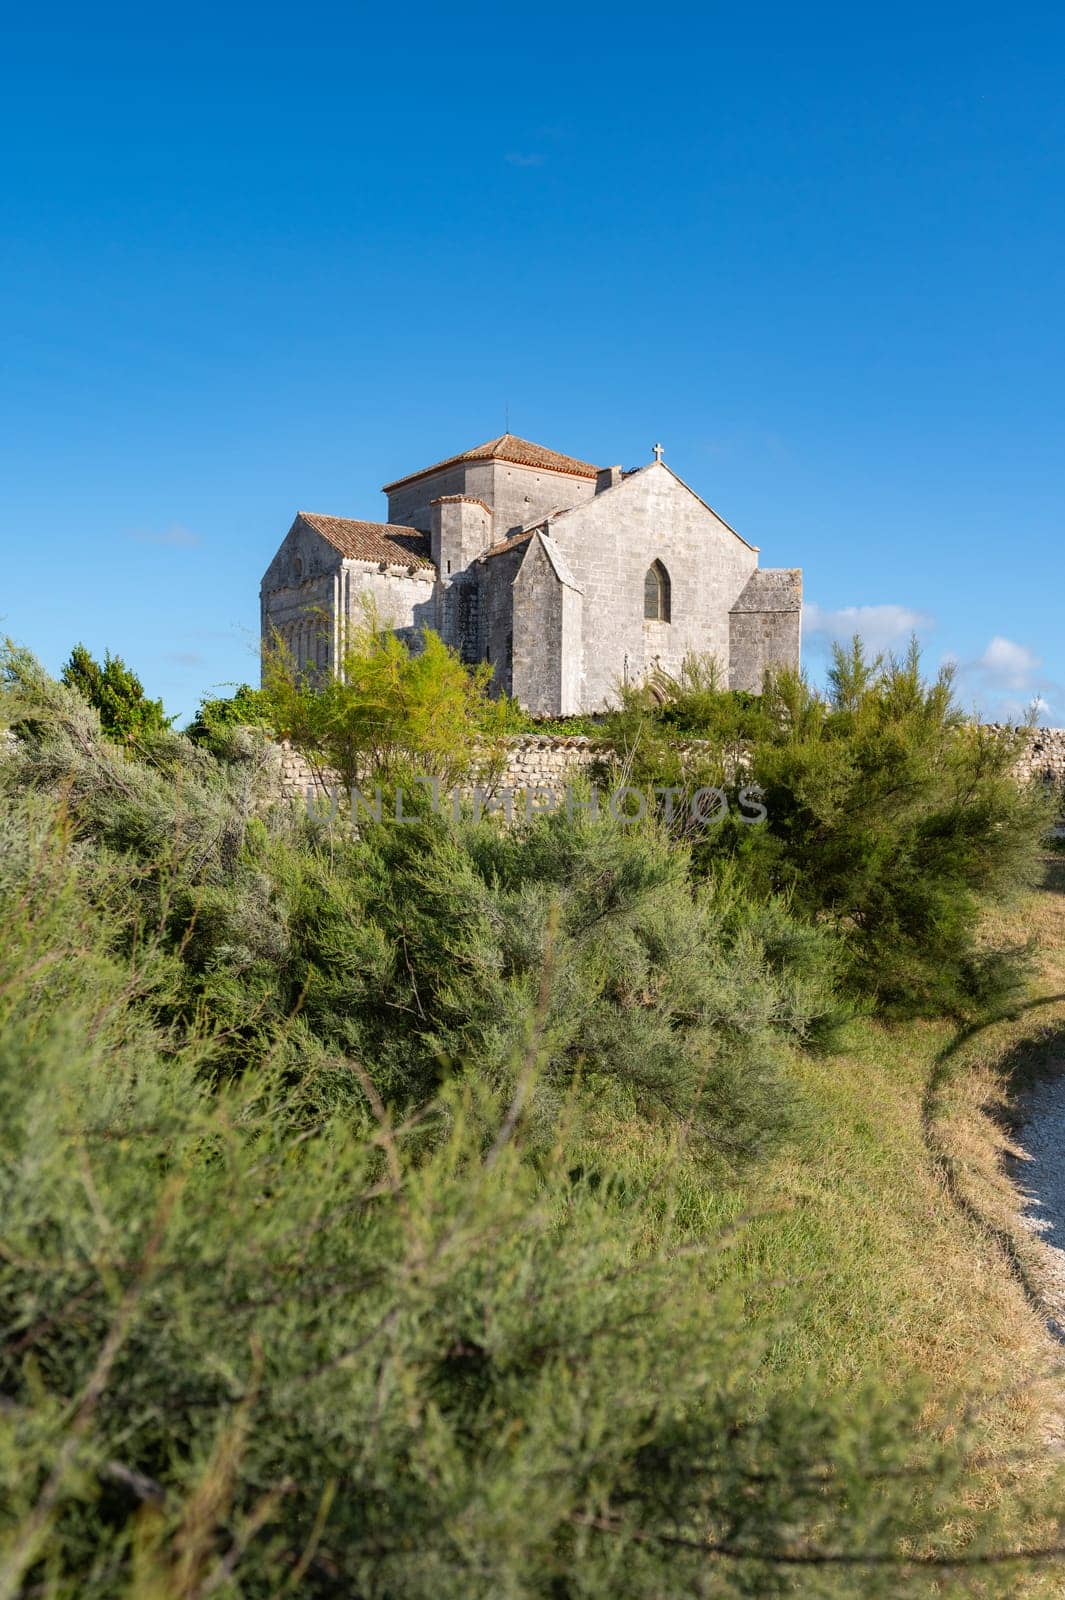 Talmont sur gironde, View of the church Sainte Radegonde 12th century. High quality photo